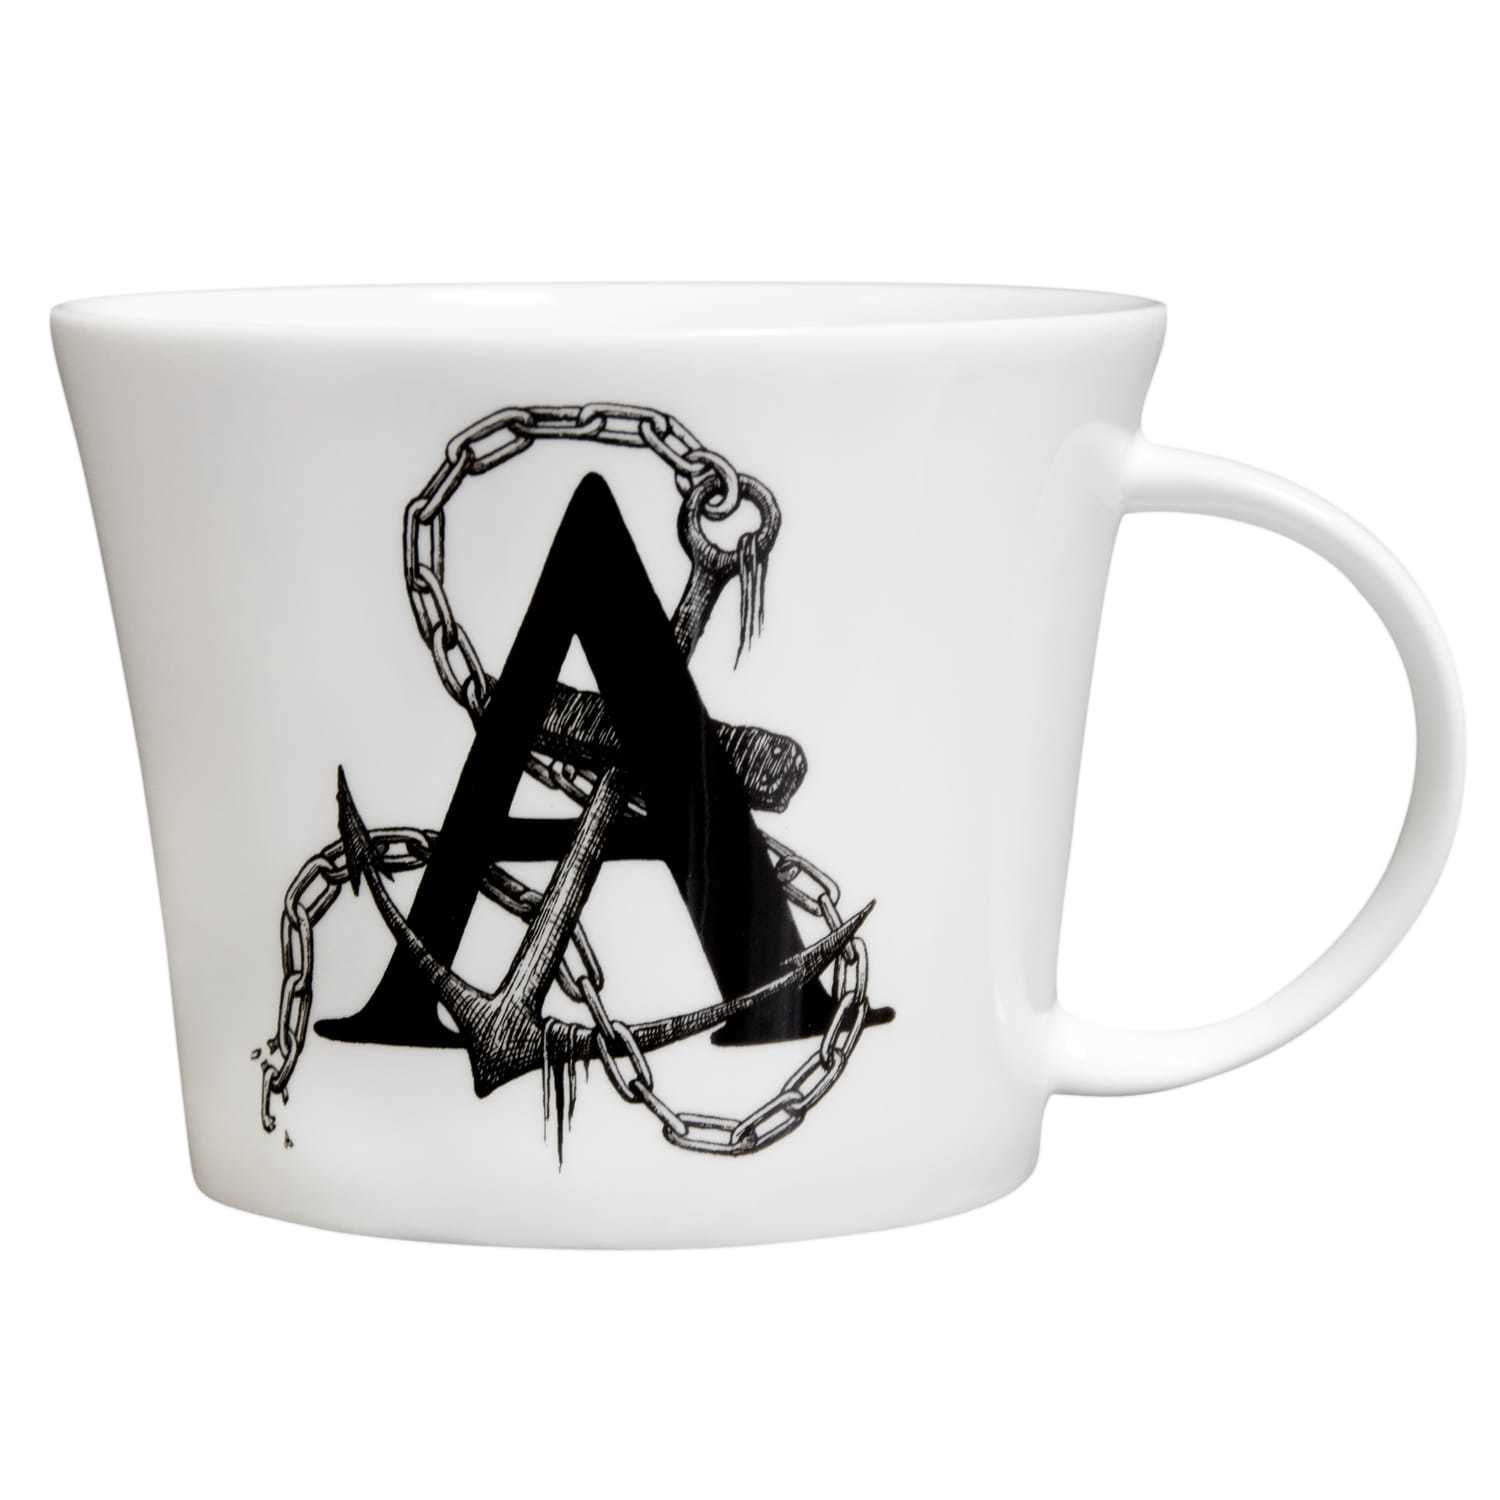 A Anchors Alphabet Mug